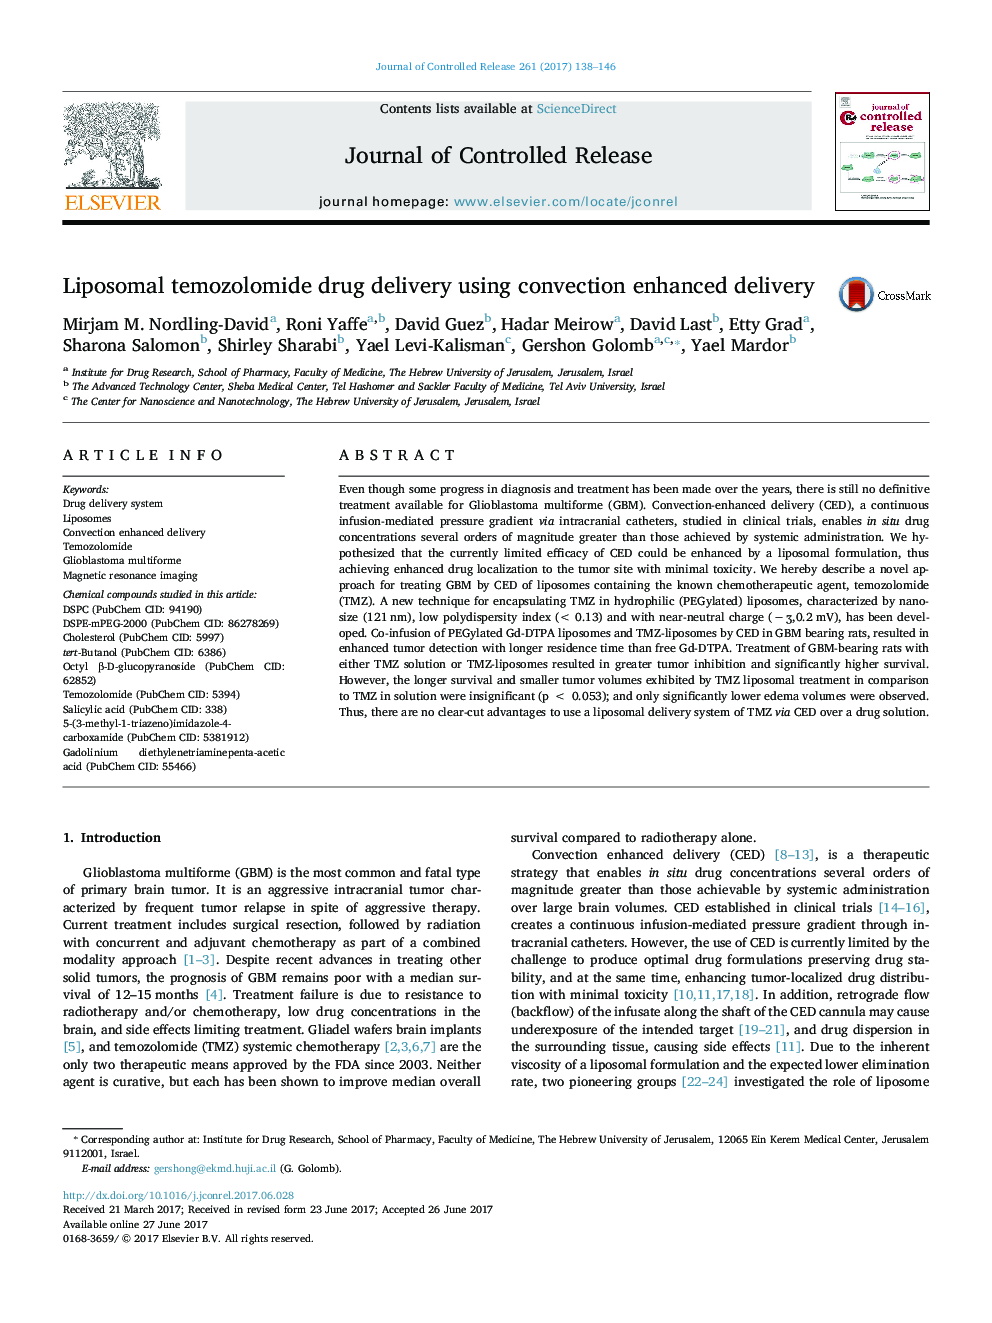 Liposomal temozolomide drug delivery using convection enhanced delivery